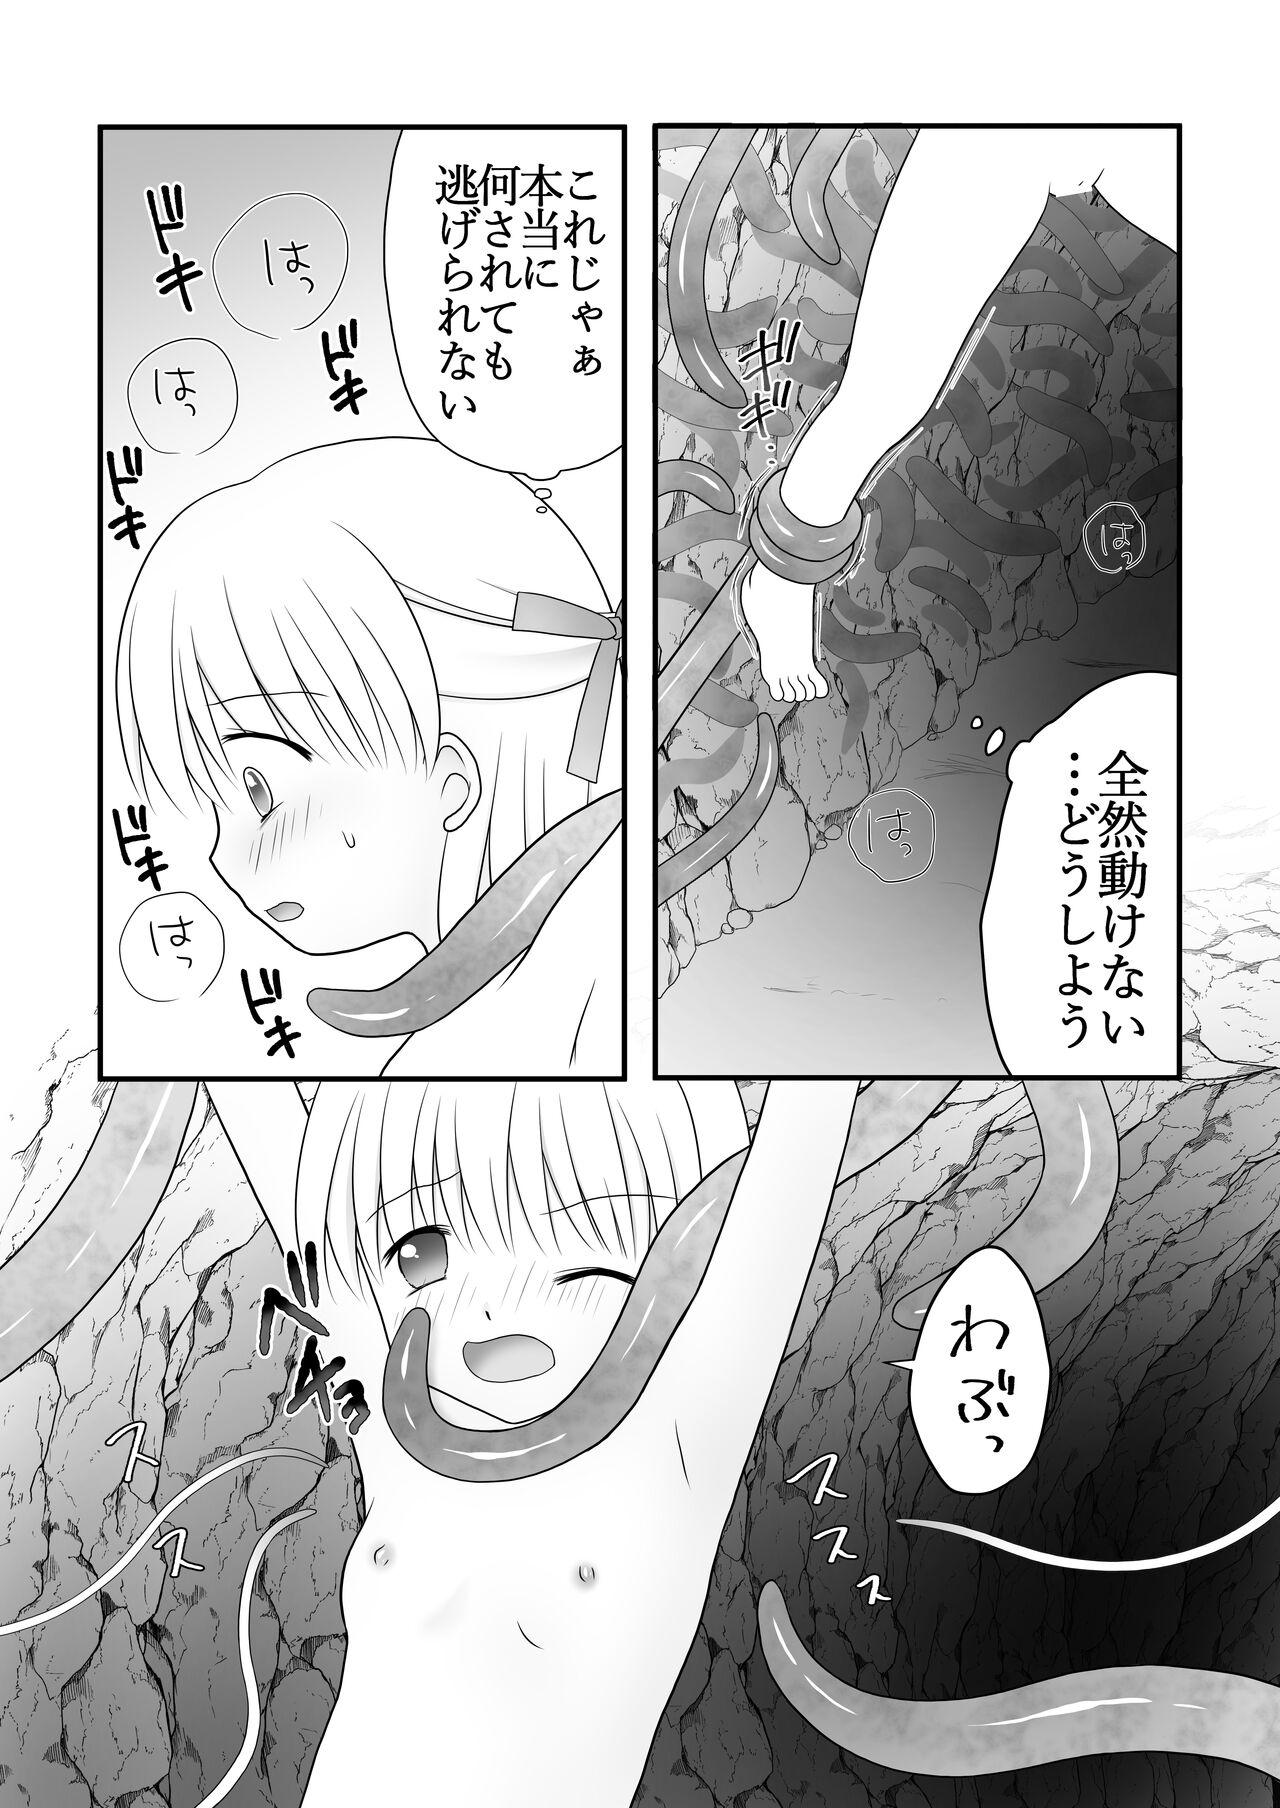 Red Head Maigo no Mori no Kusuguribana 4 - Original Camporn - Page 7